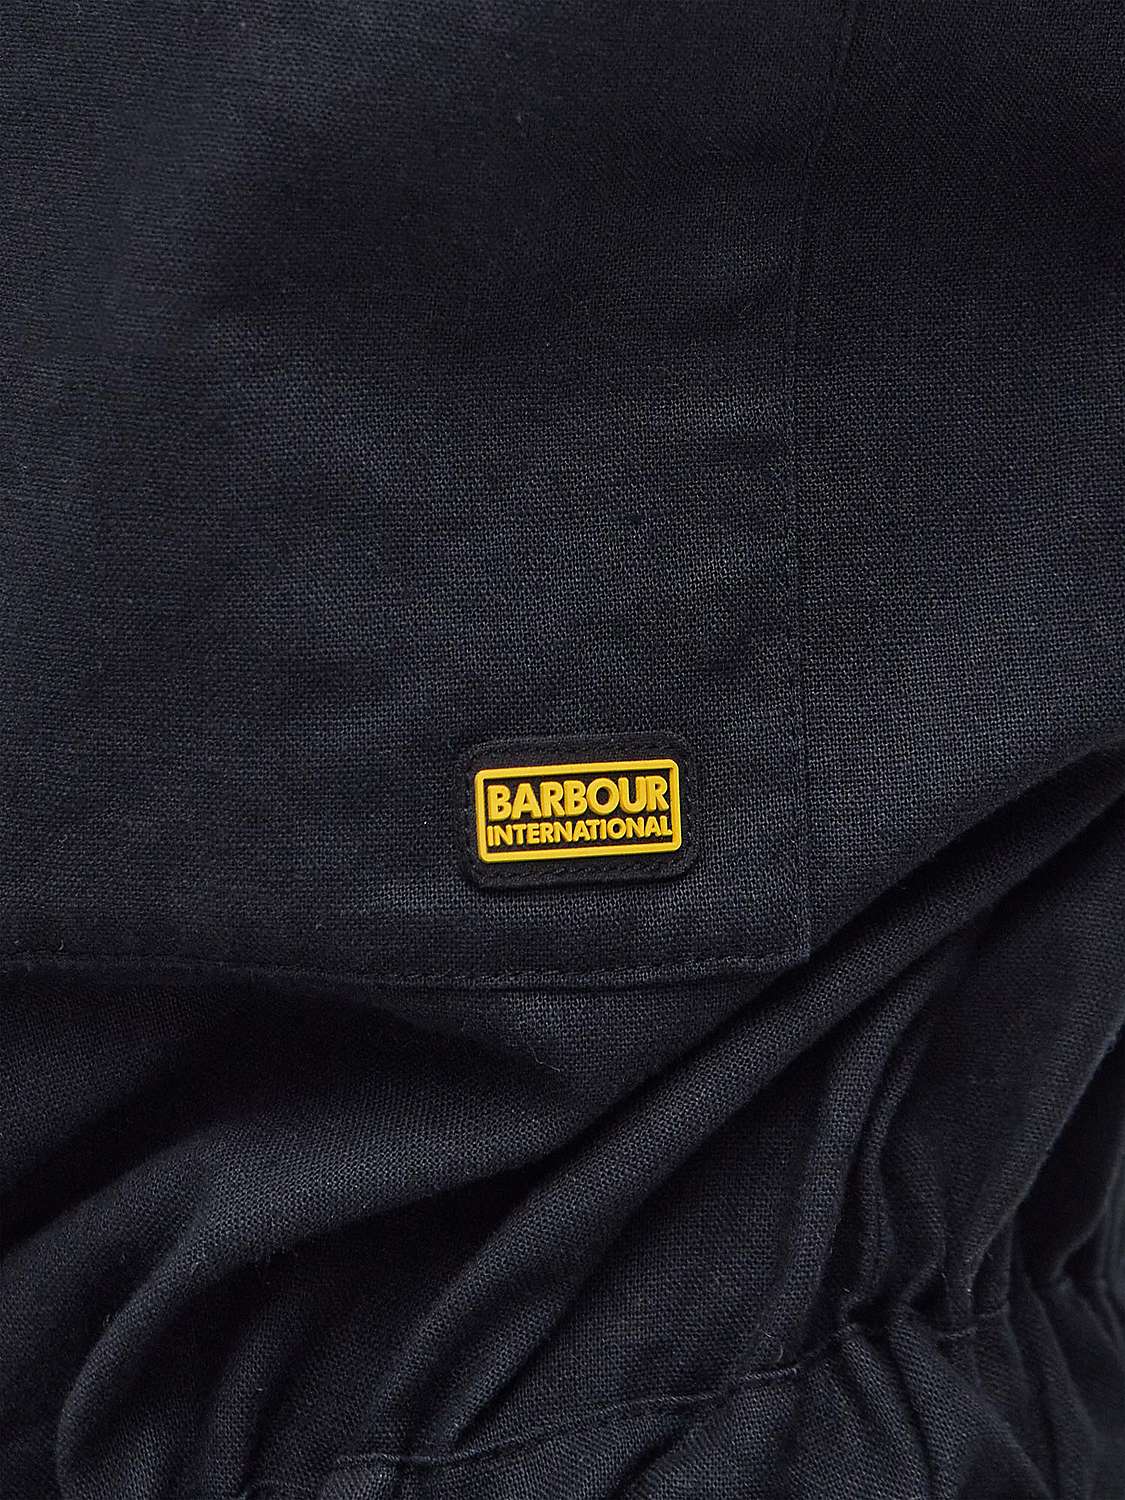 Buy Barbour International Rosell Linen Blend Playsuit, Black Online at johnlewis.com